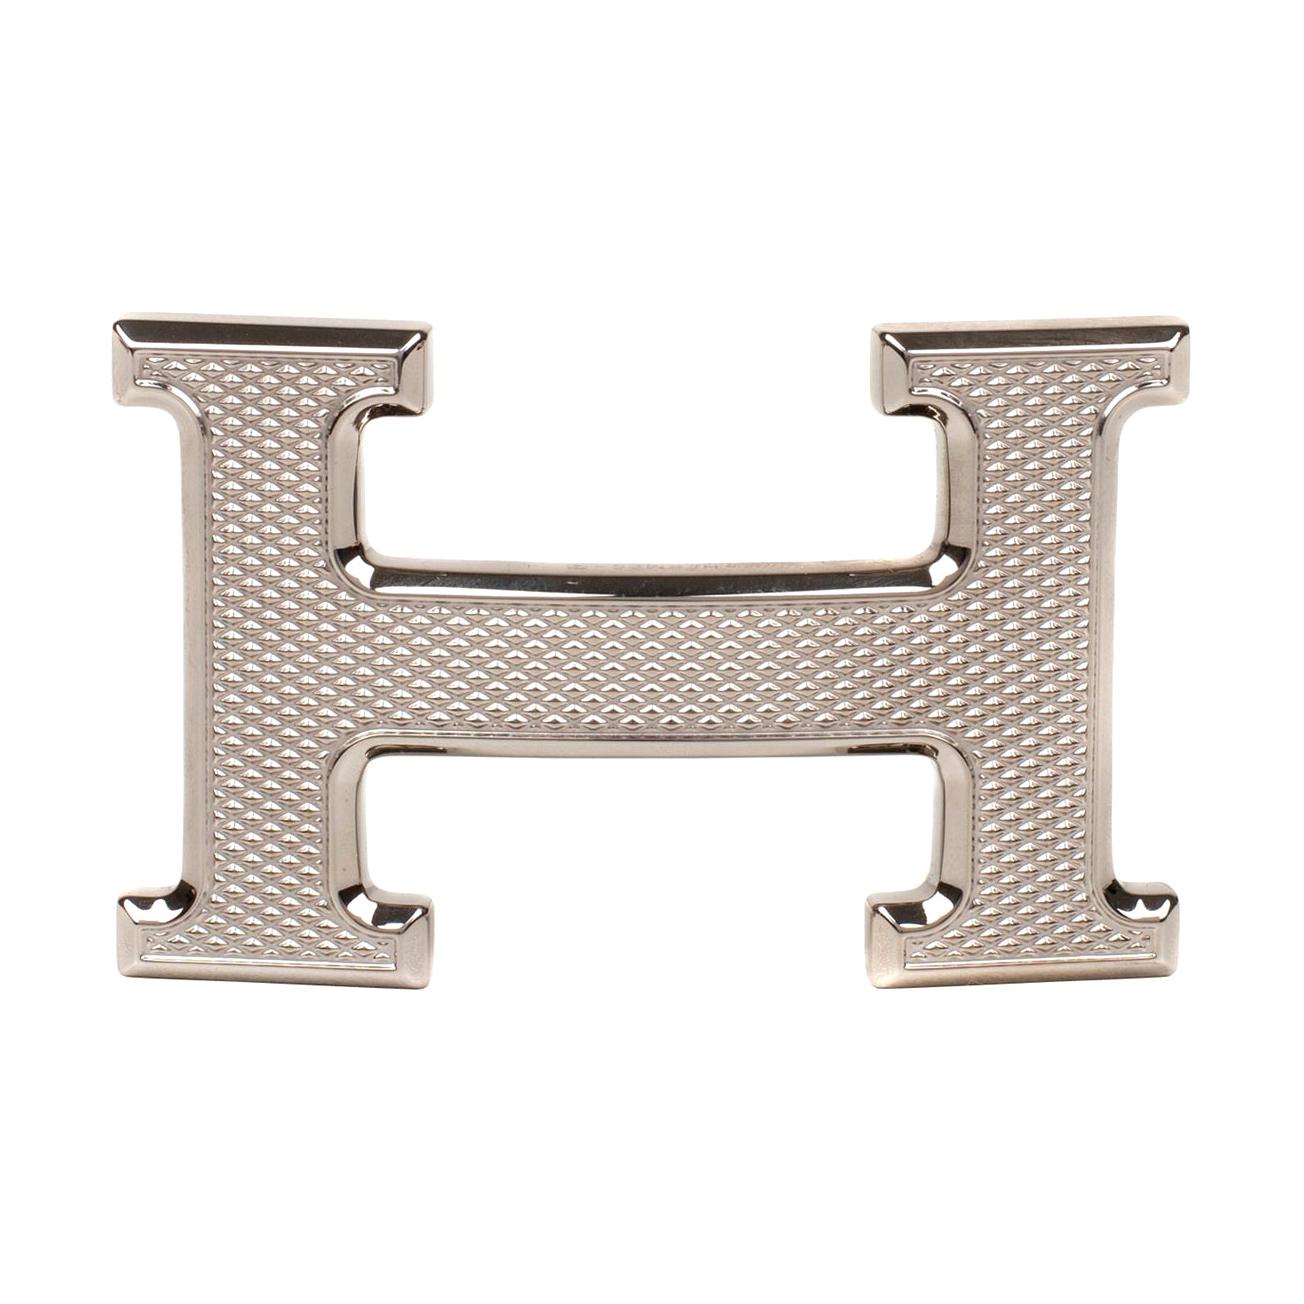 Brand New Hermes Belt Buckle Model Guillochée Silver Tone